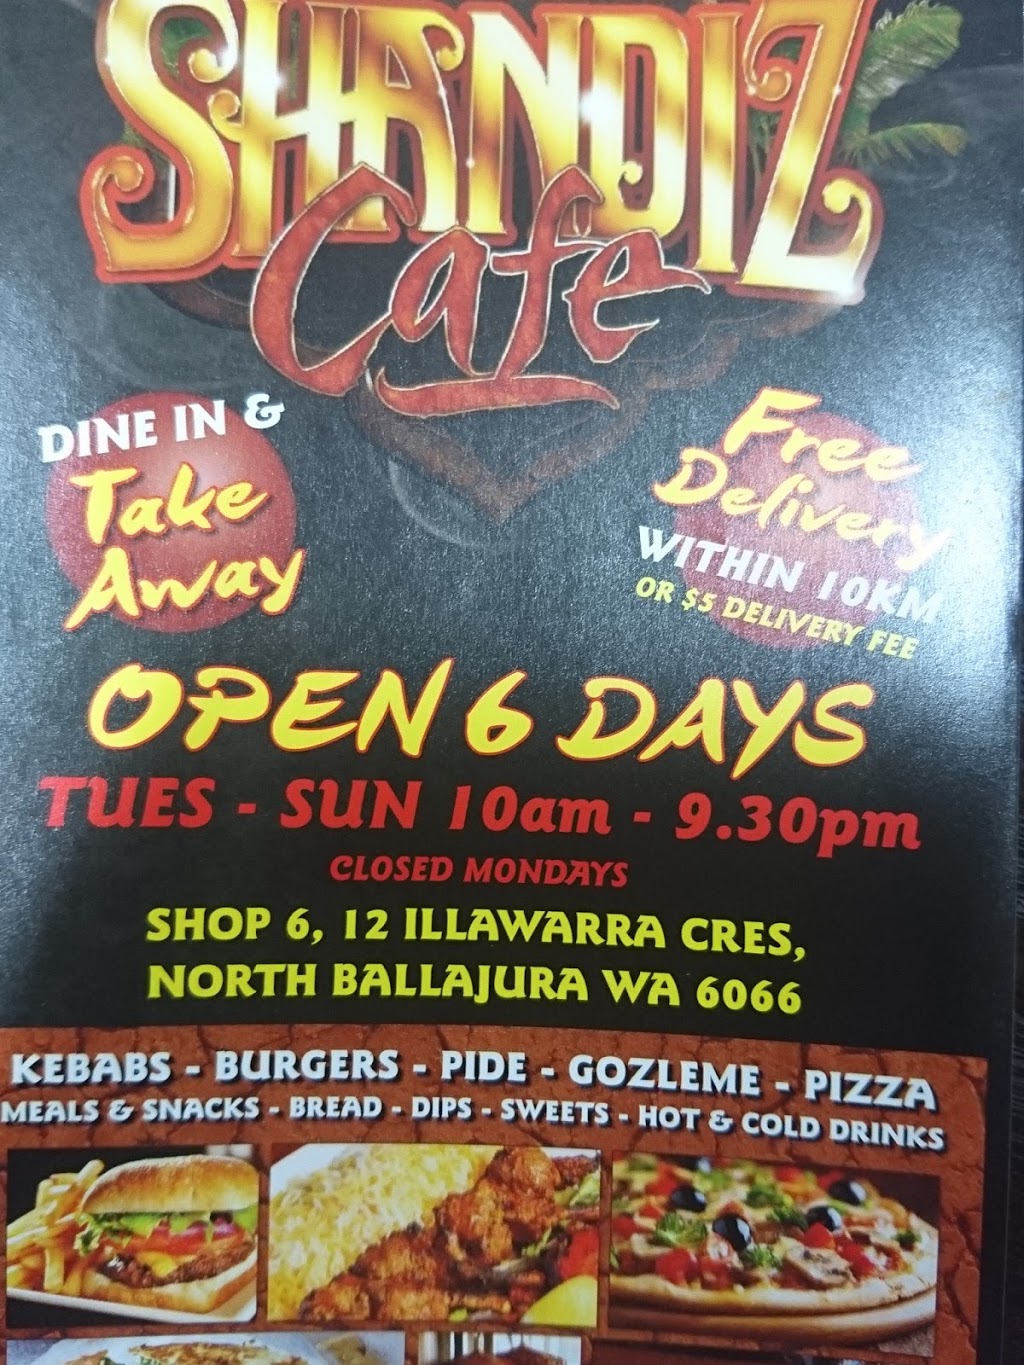 Shandiz Cafe | cafe | Ballajura WA 6066, Australia